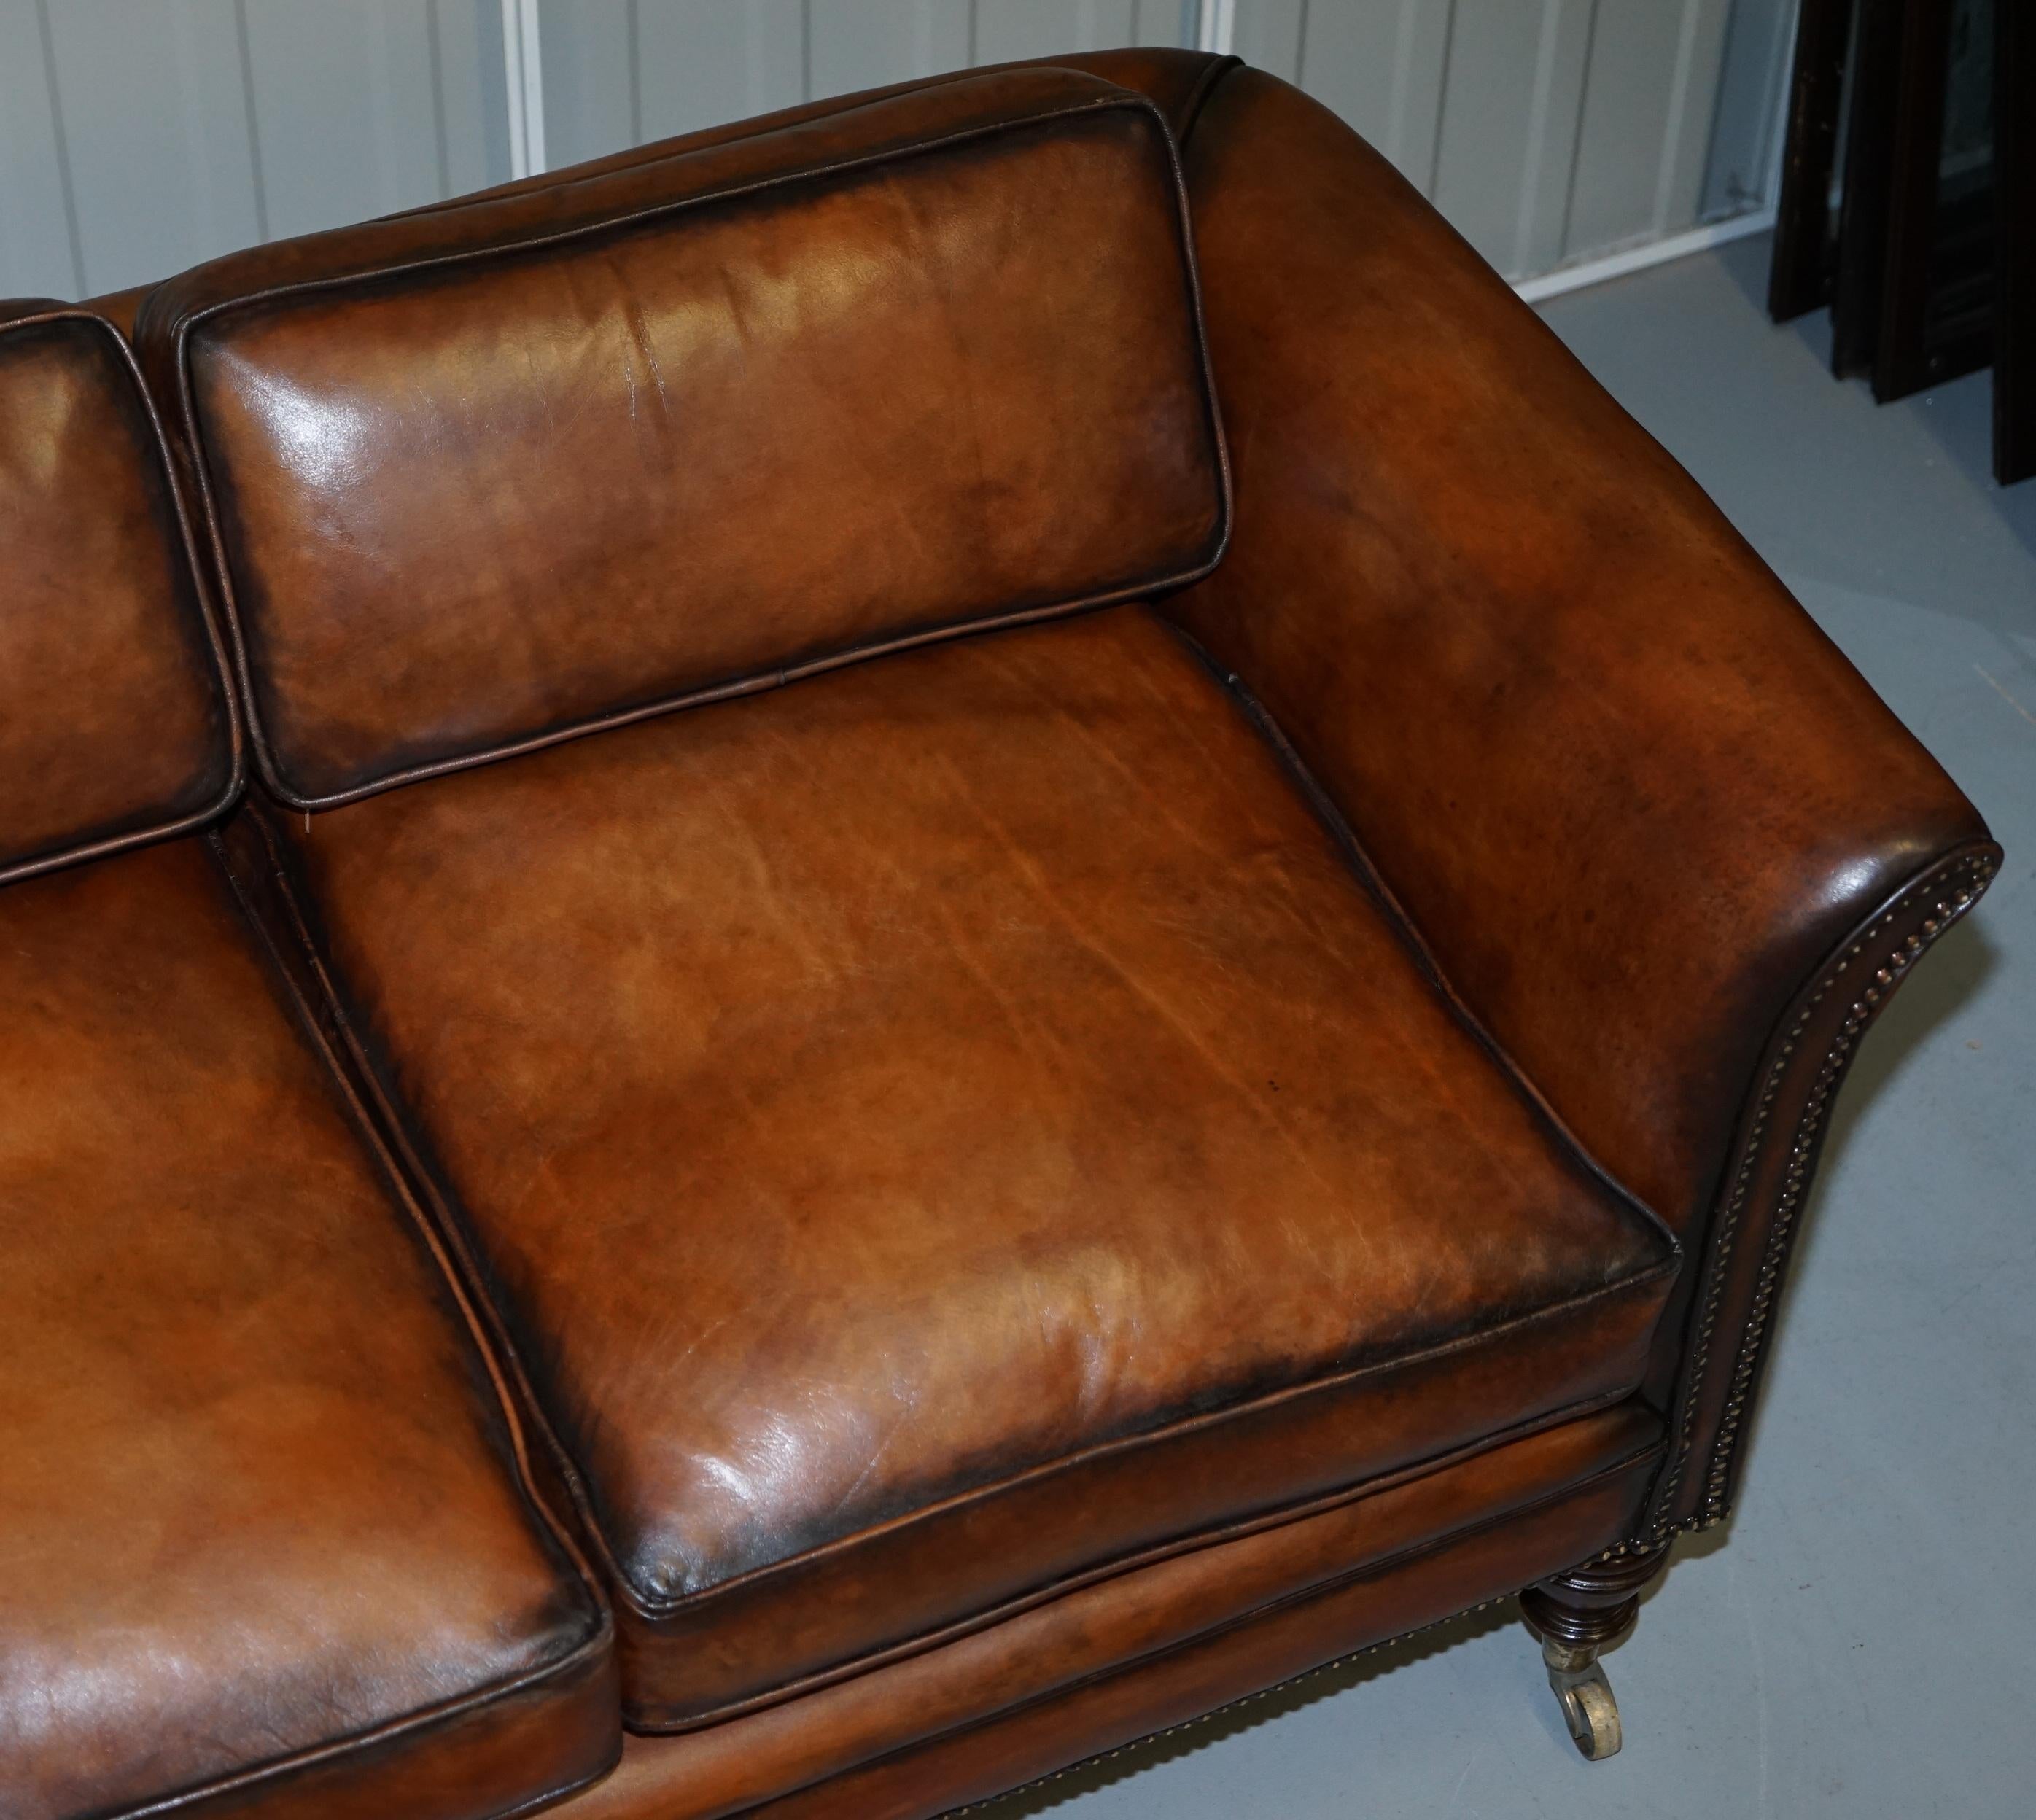 very leather sofas